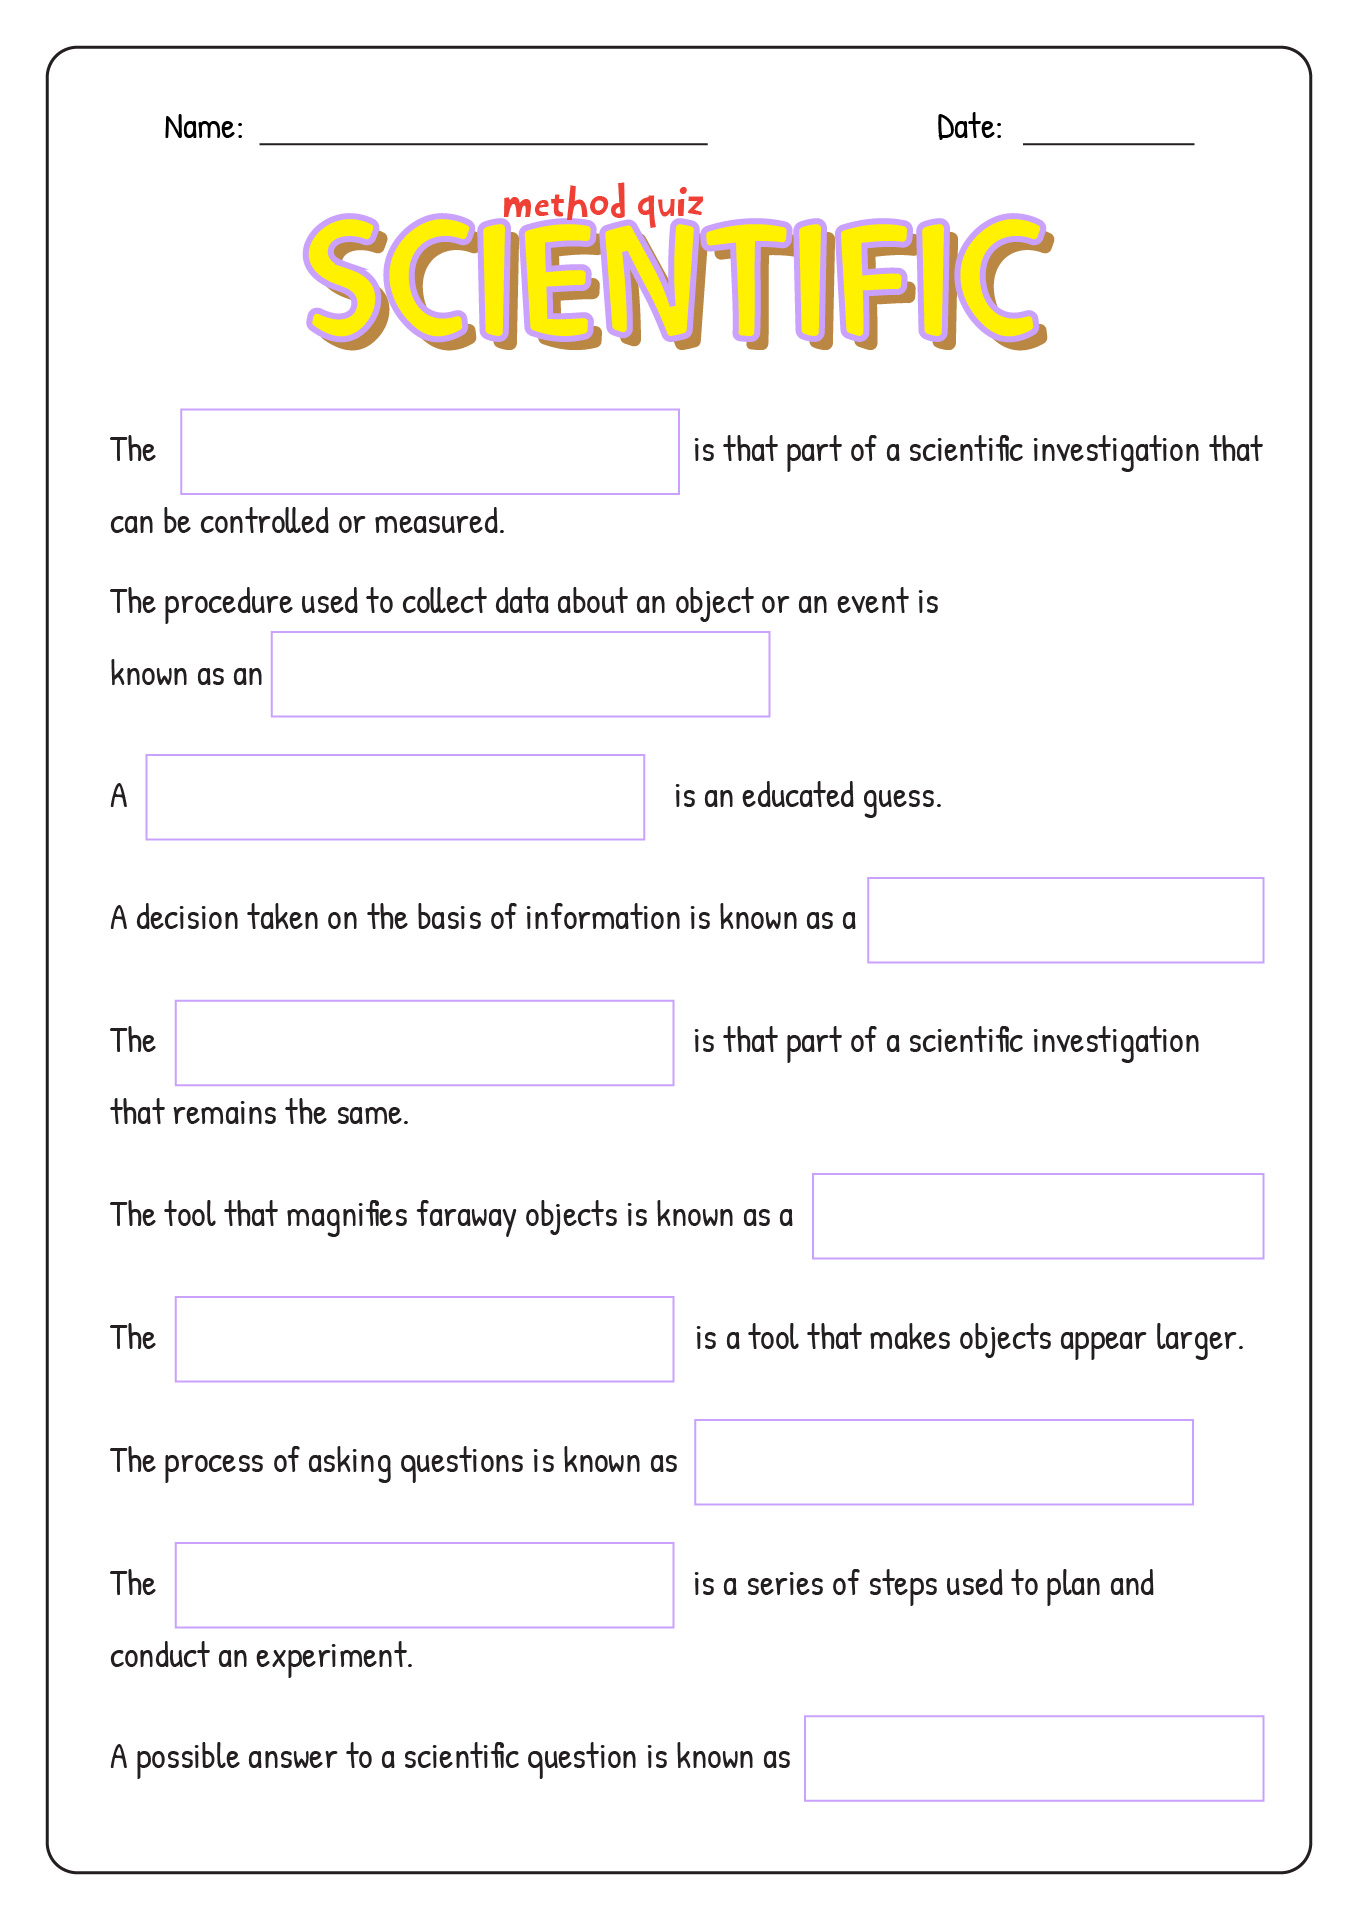 Scientific Method Quiz Worksheet